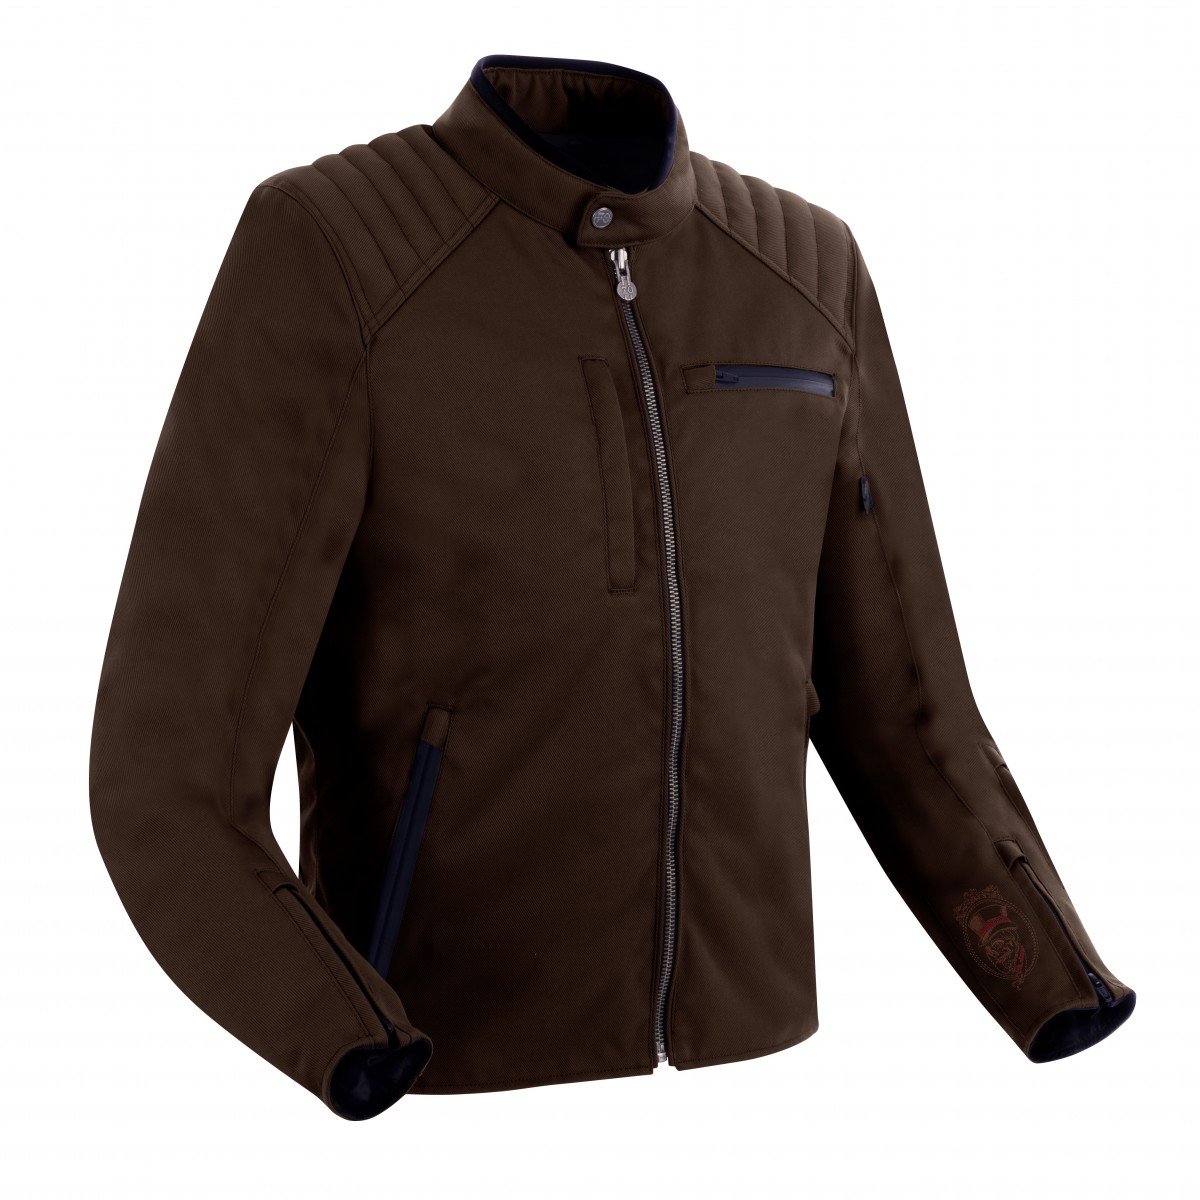 Image of Segura Eternal Jacket Brown Size 2XL ID 3660815168592